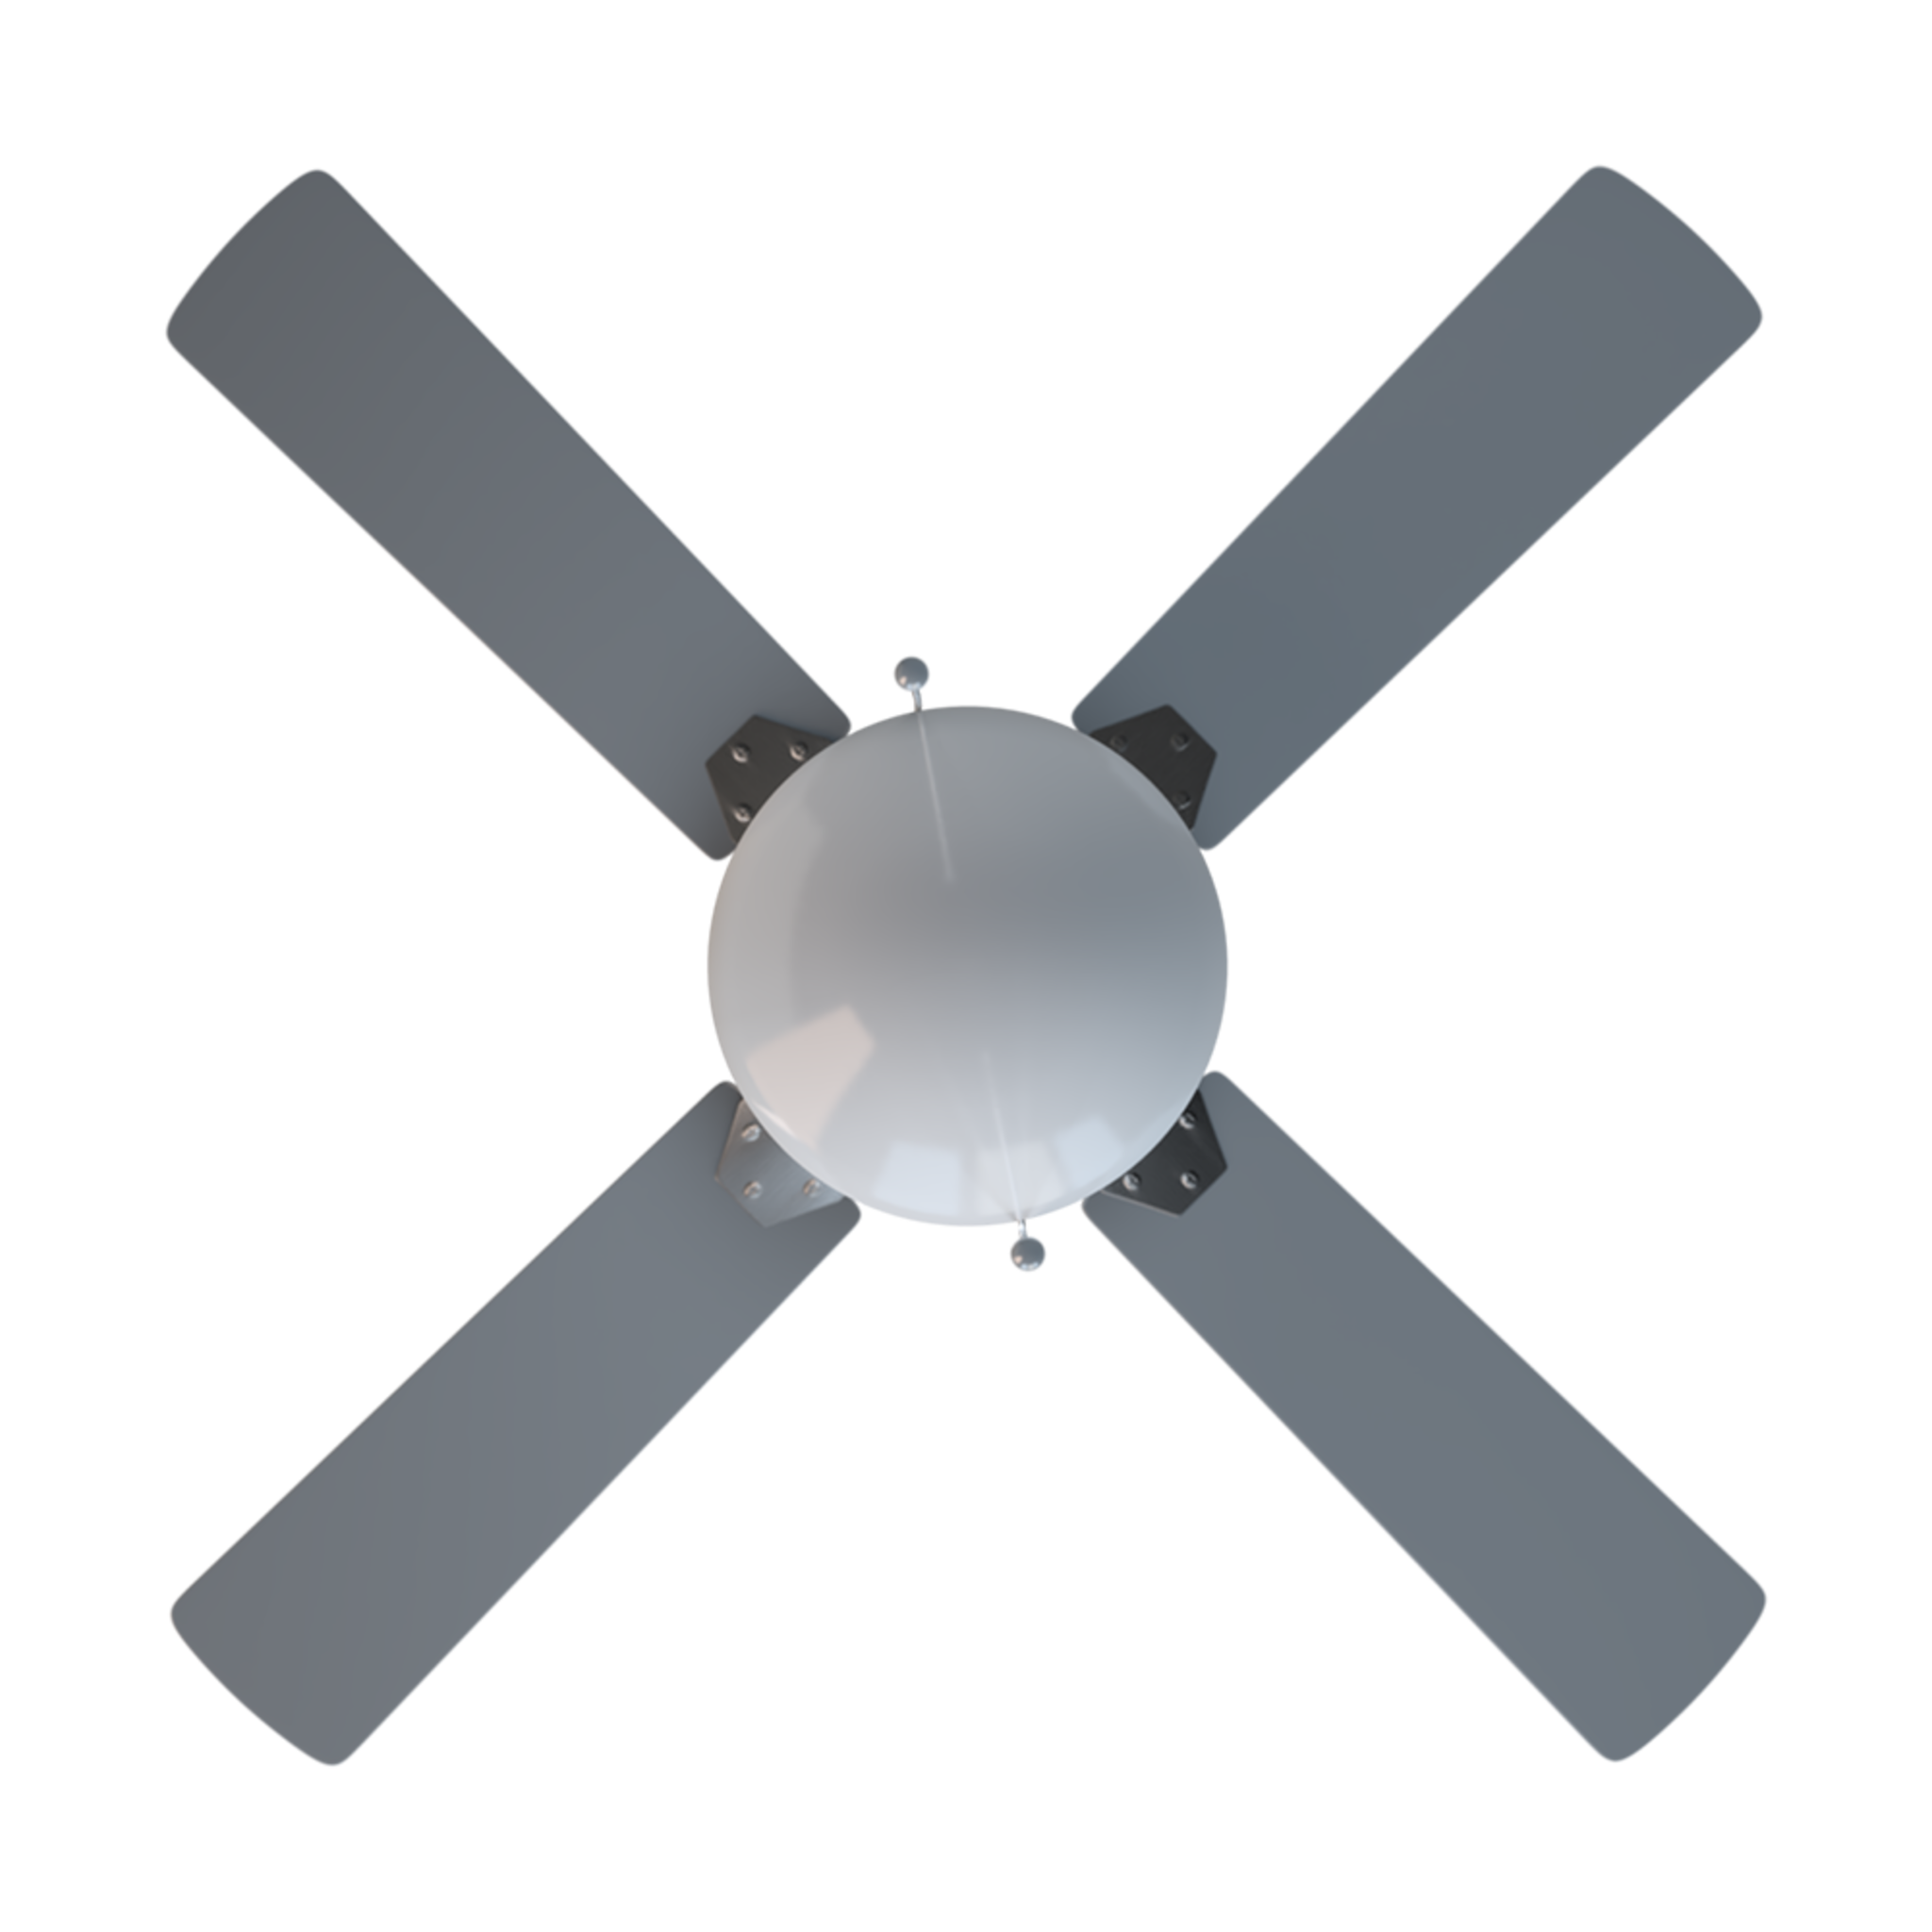 Ventilador de Techo EnergySilence Aero 450. 106 cm de Diámetro, Luz, 4 Aspas Reversibles, 3 Velocidades, Función Invierno, 50W